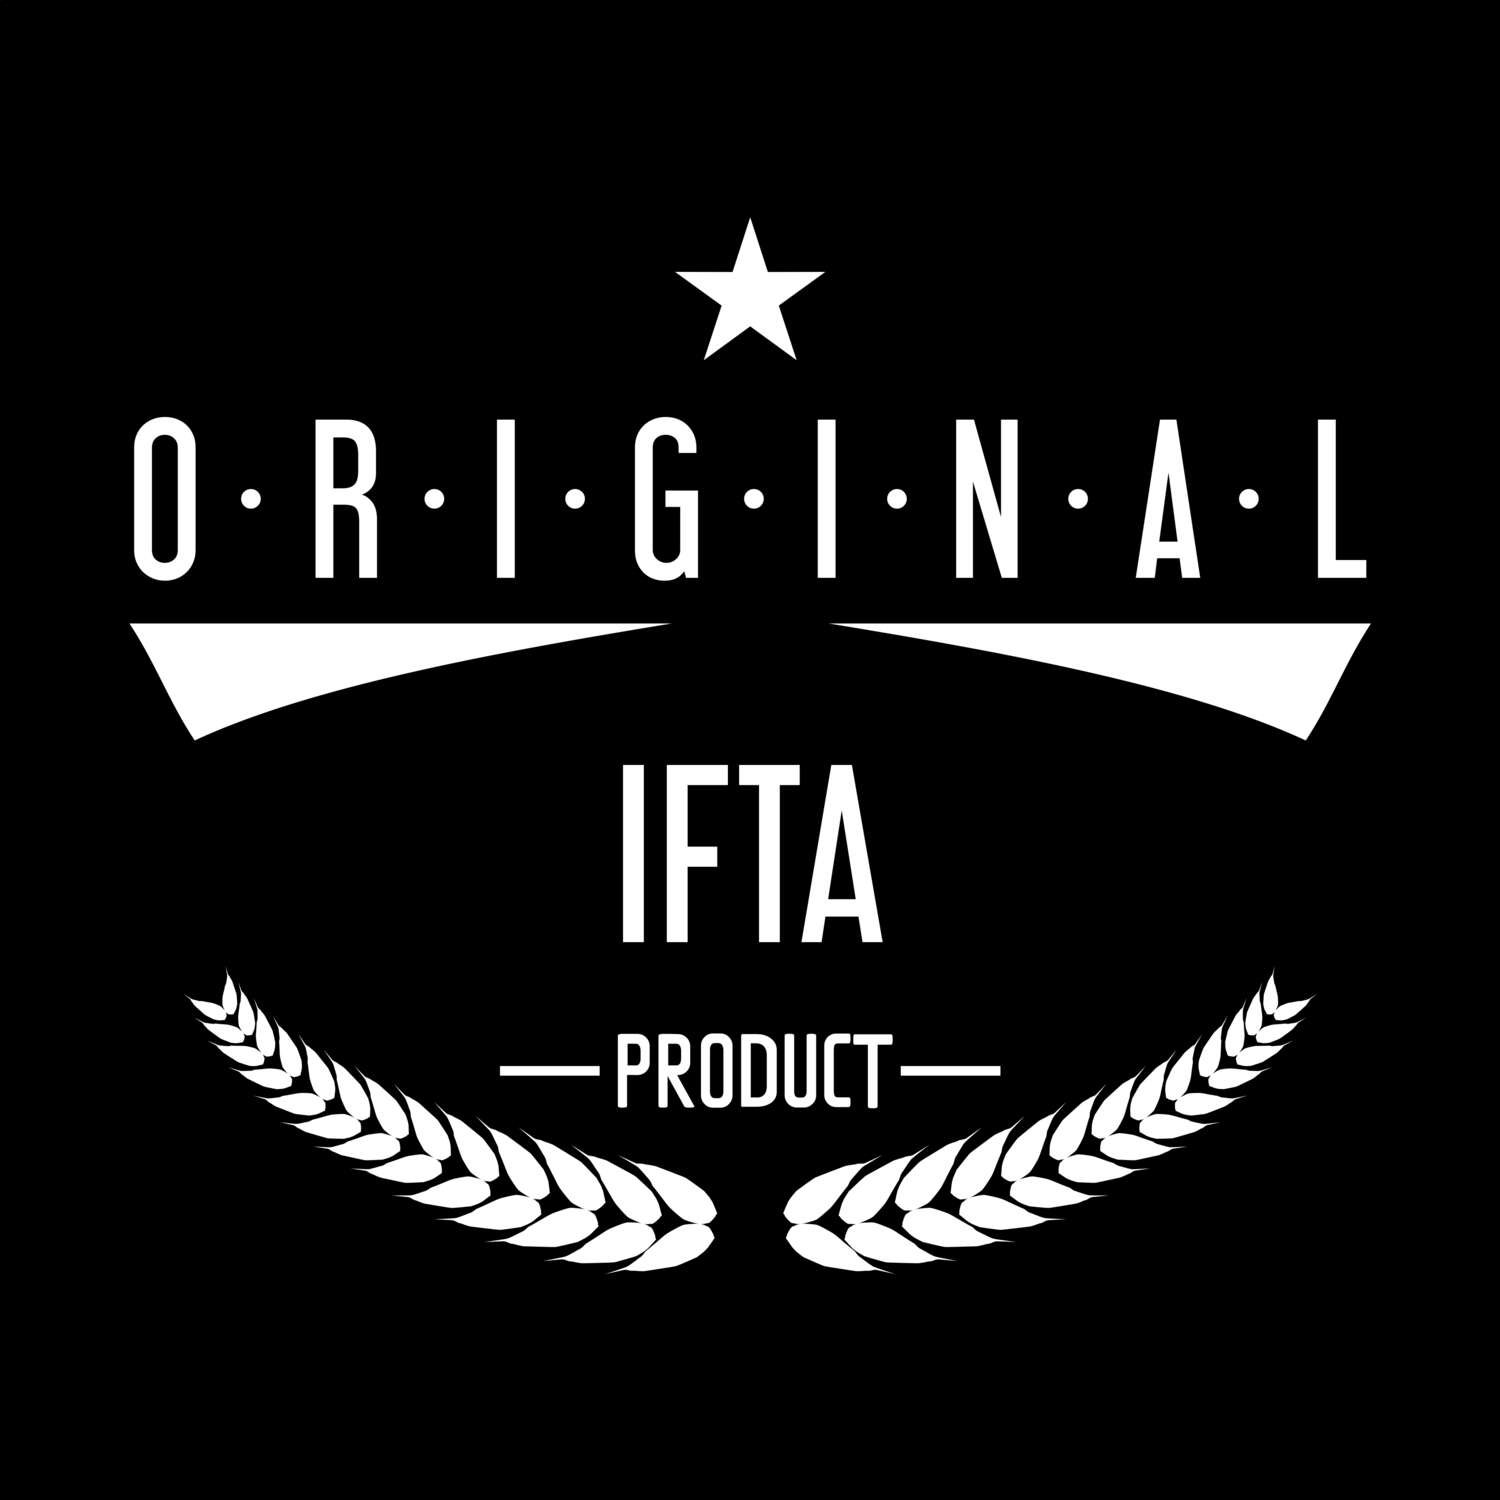 Ifta T-Shirt »Original Product«